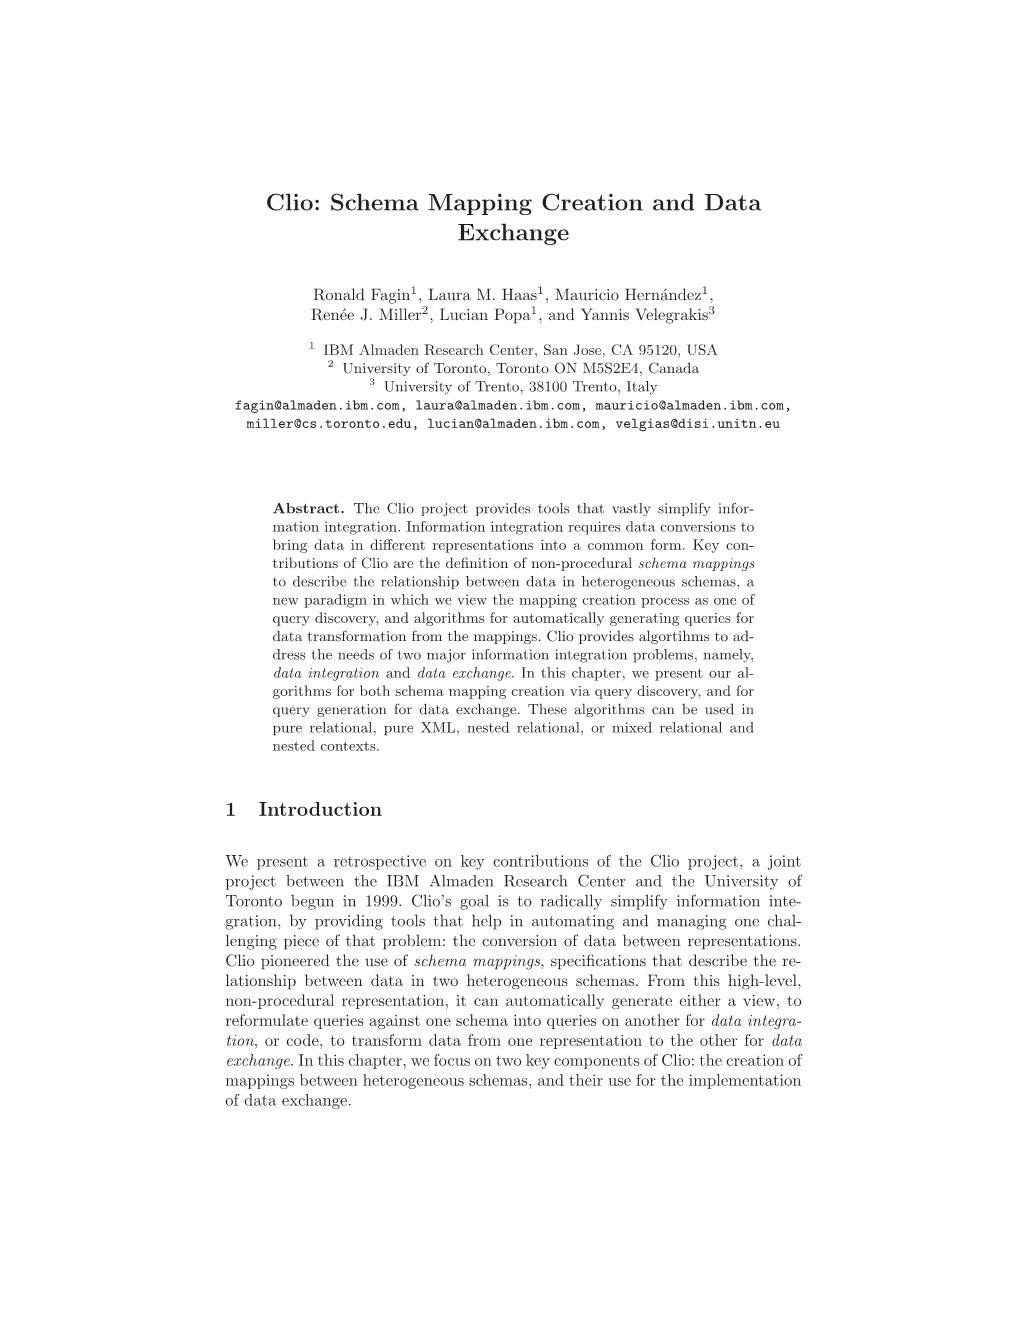 Clio: Schema Mapping Creation and Data Exchange